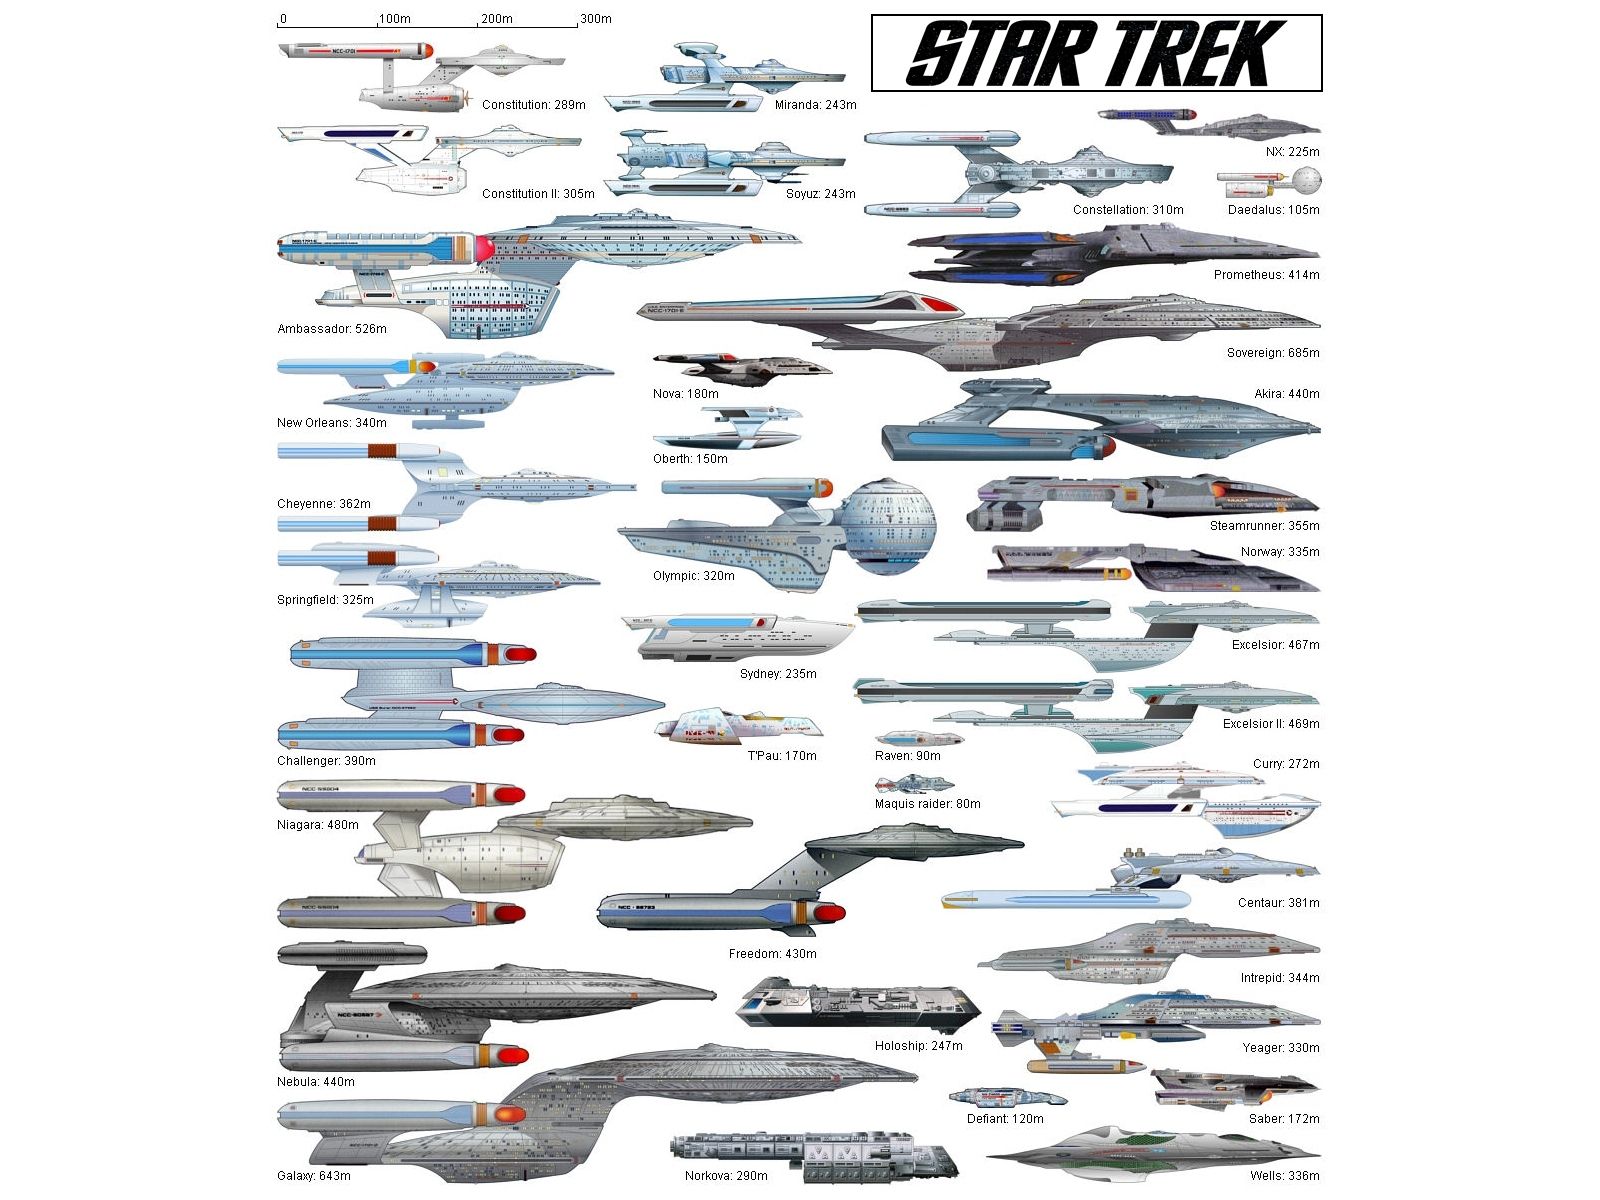 Star Trek Wallpaper Number 8 1600 x 1200 Pixels